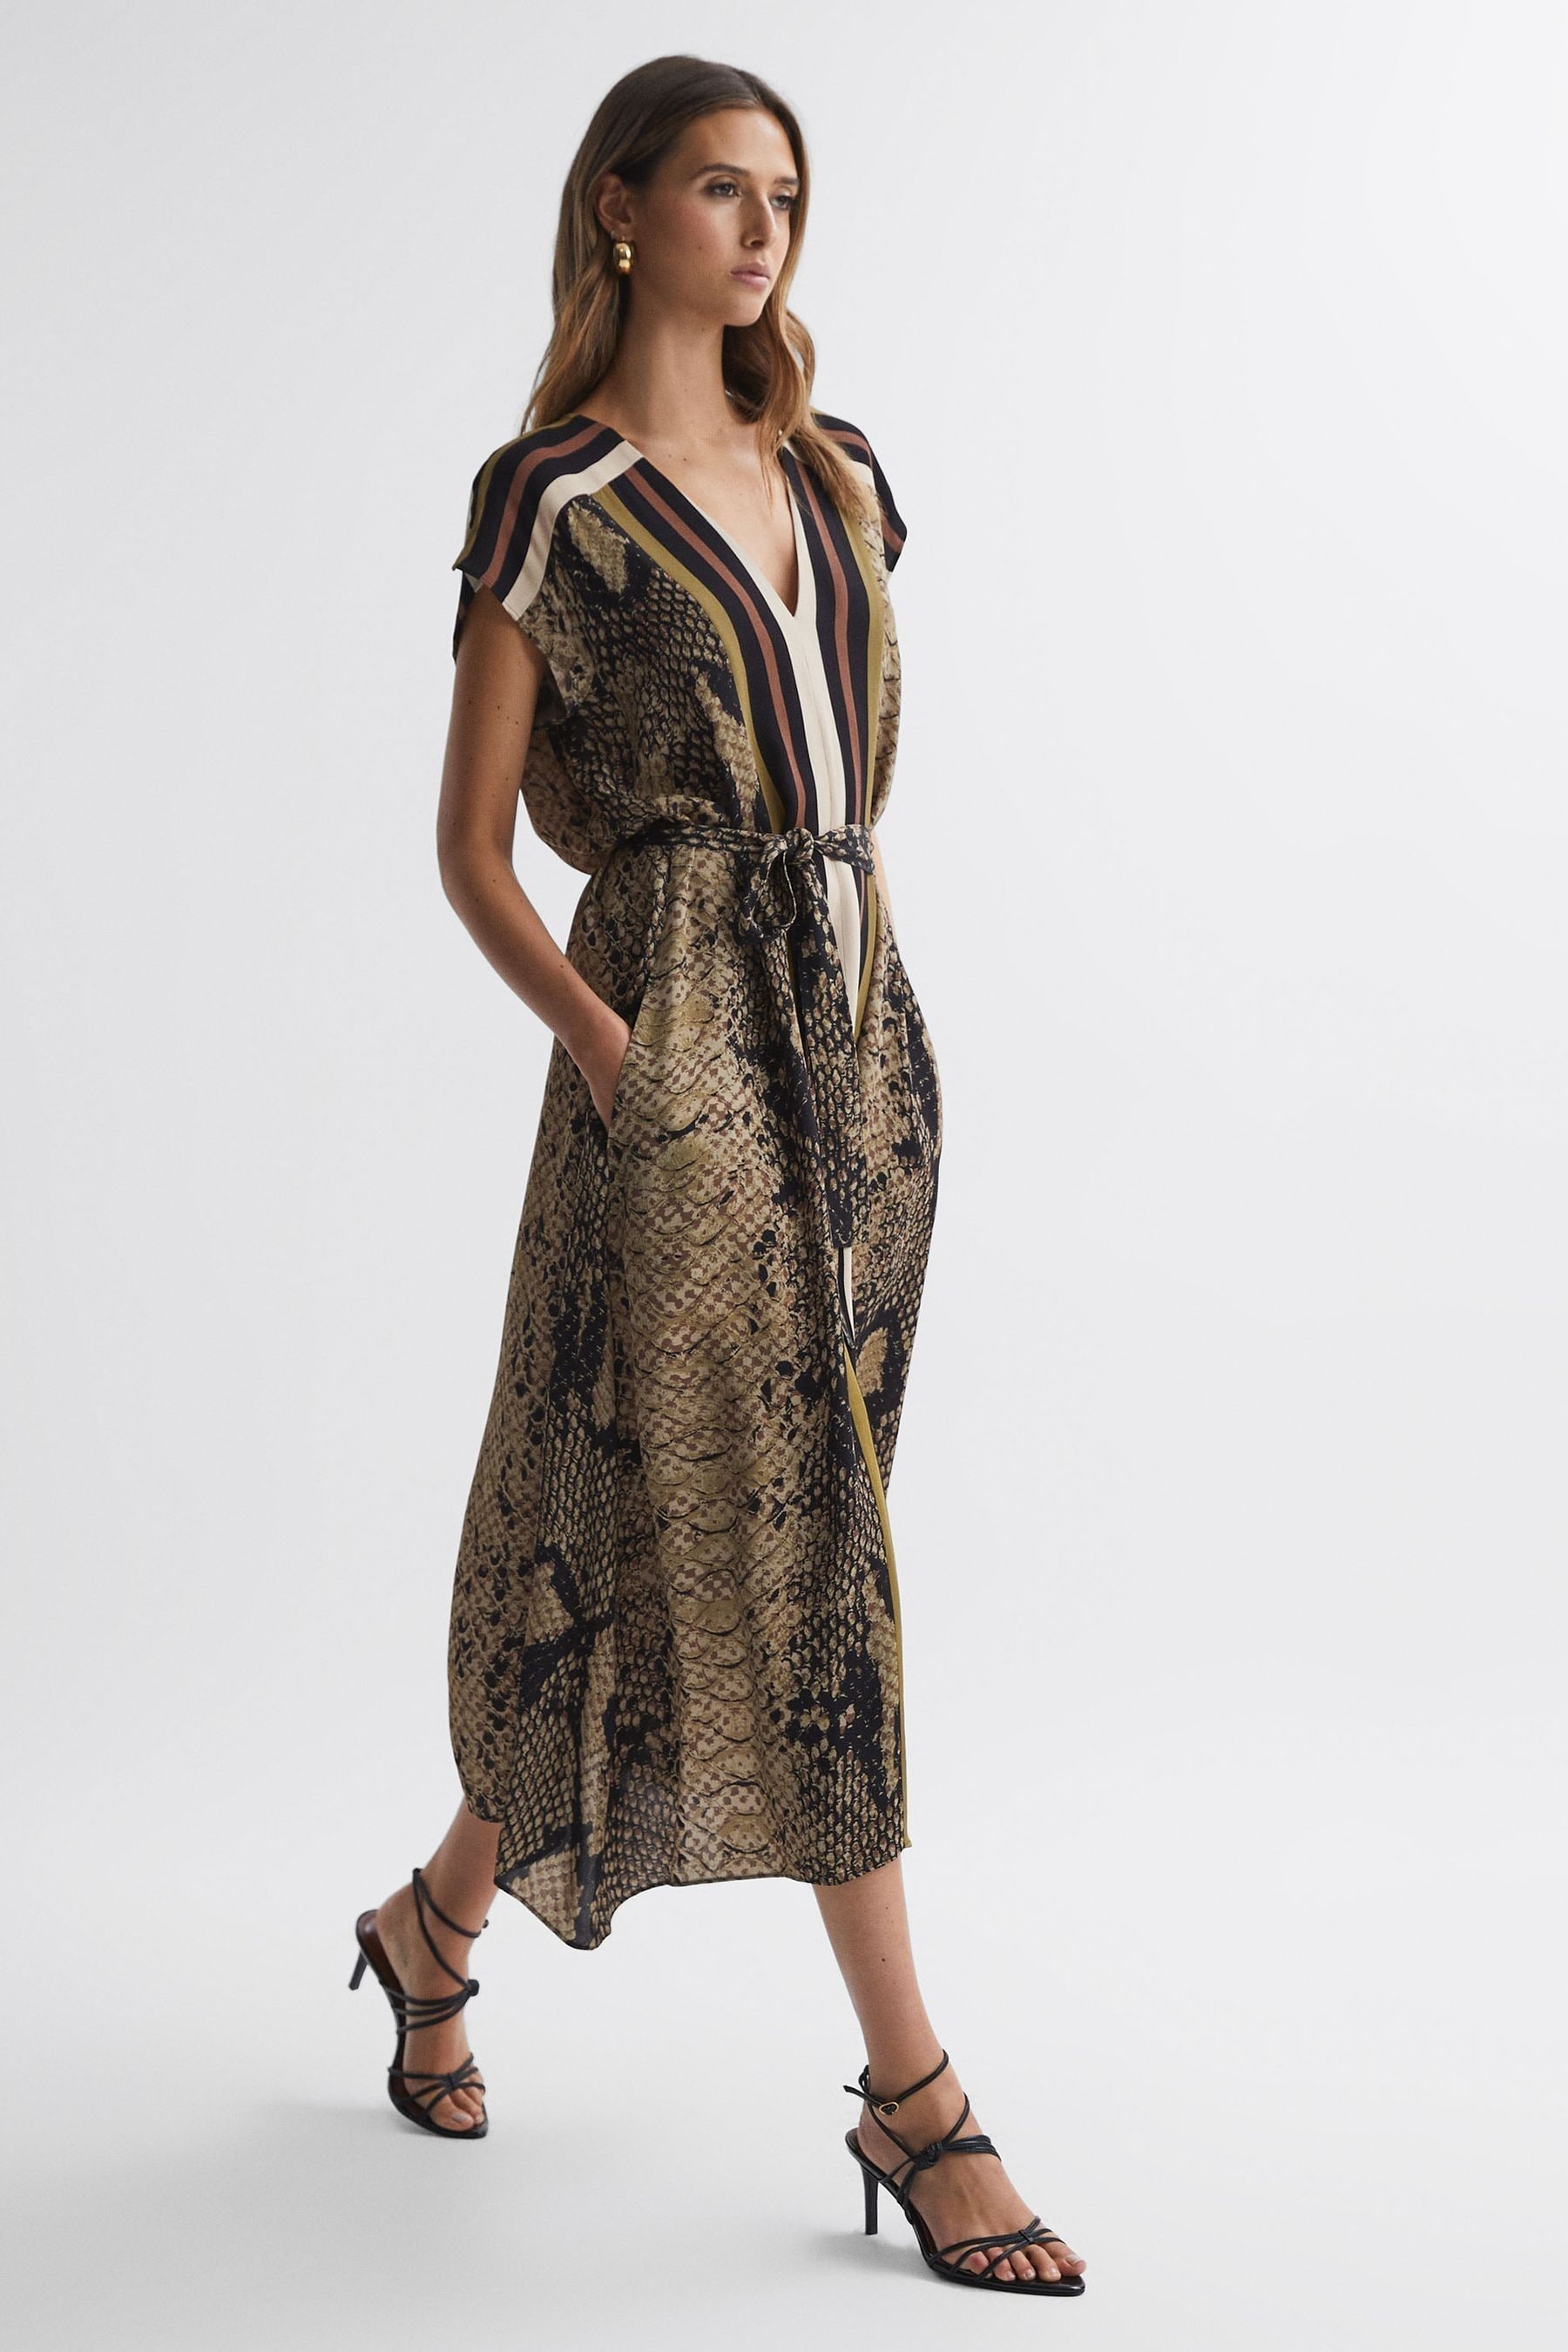 Reiss Bea - Brown Snake Print Midi Dress, Us 6